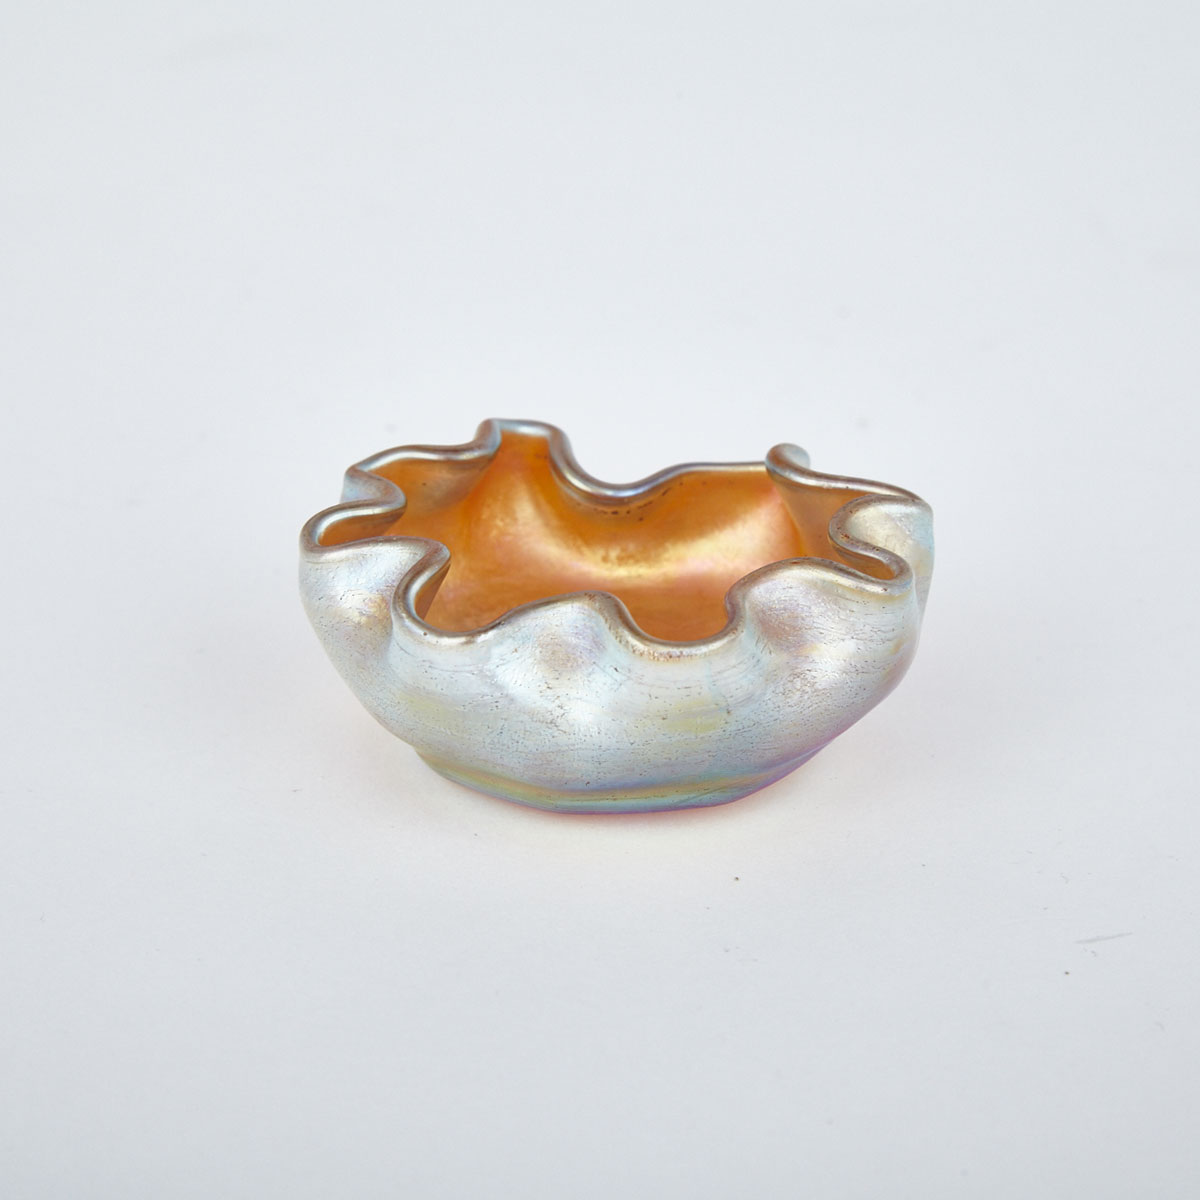 Tiffany ‘Favrile’ Iridescent Glass Salt, early 20th century